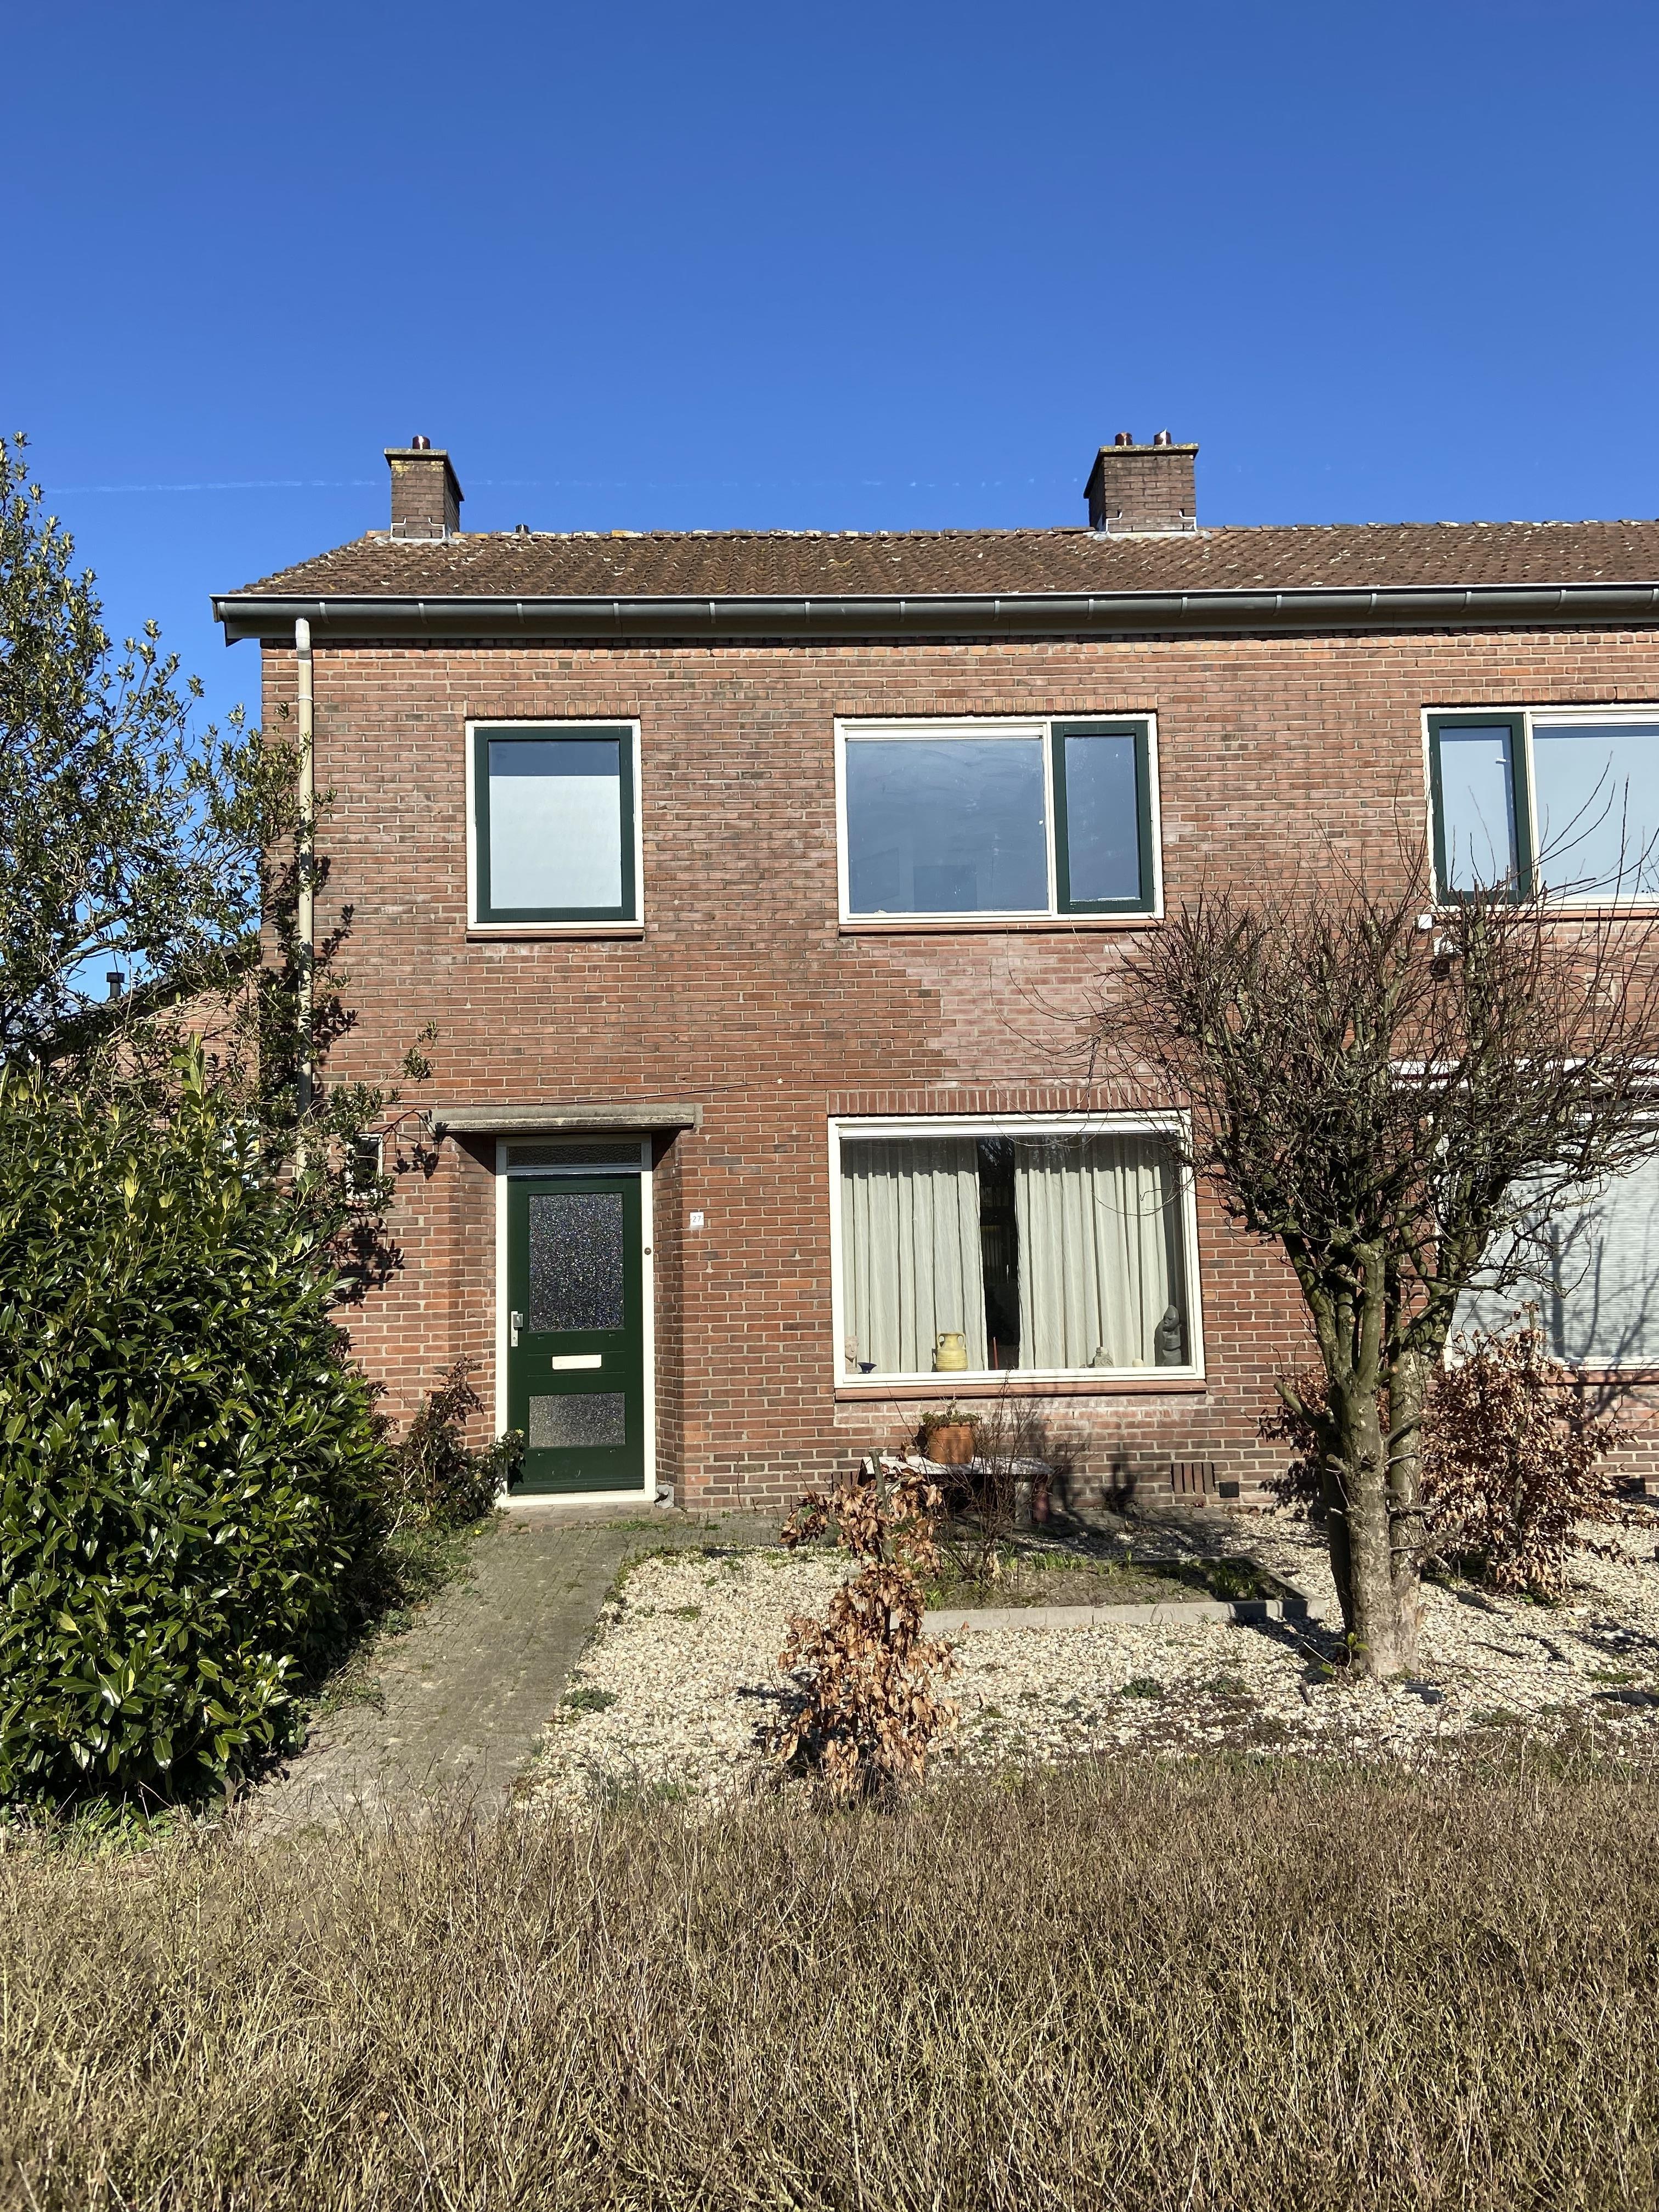 Korte Molenstraat 27, 6665 BD Driel, Nederland